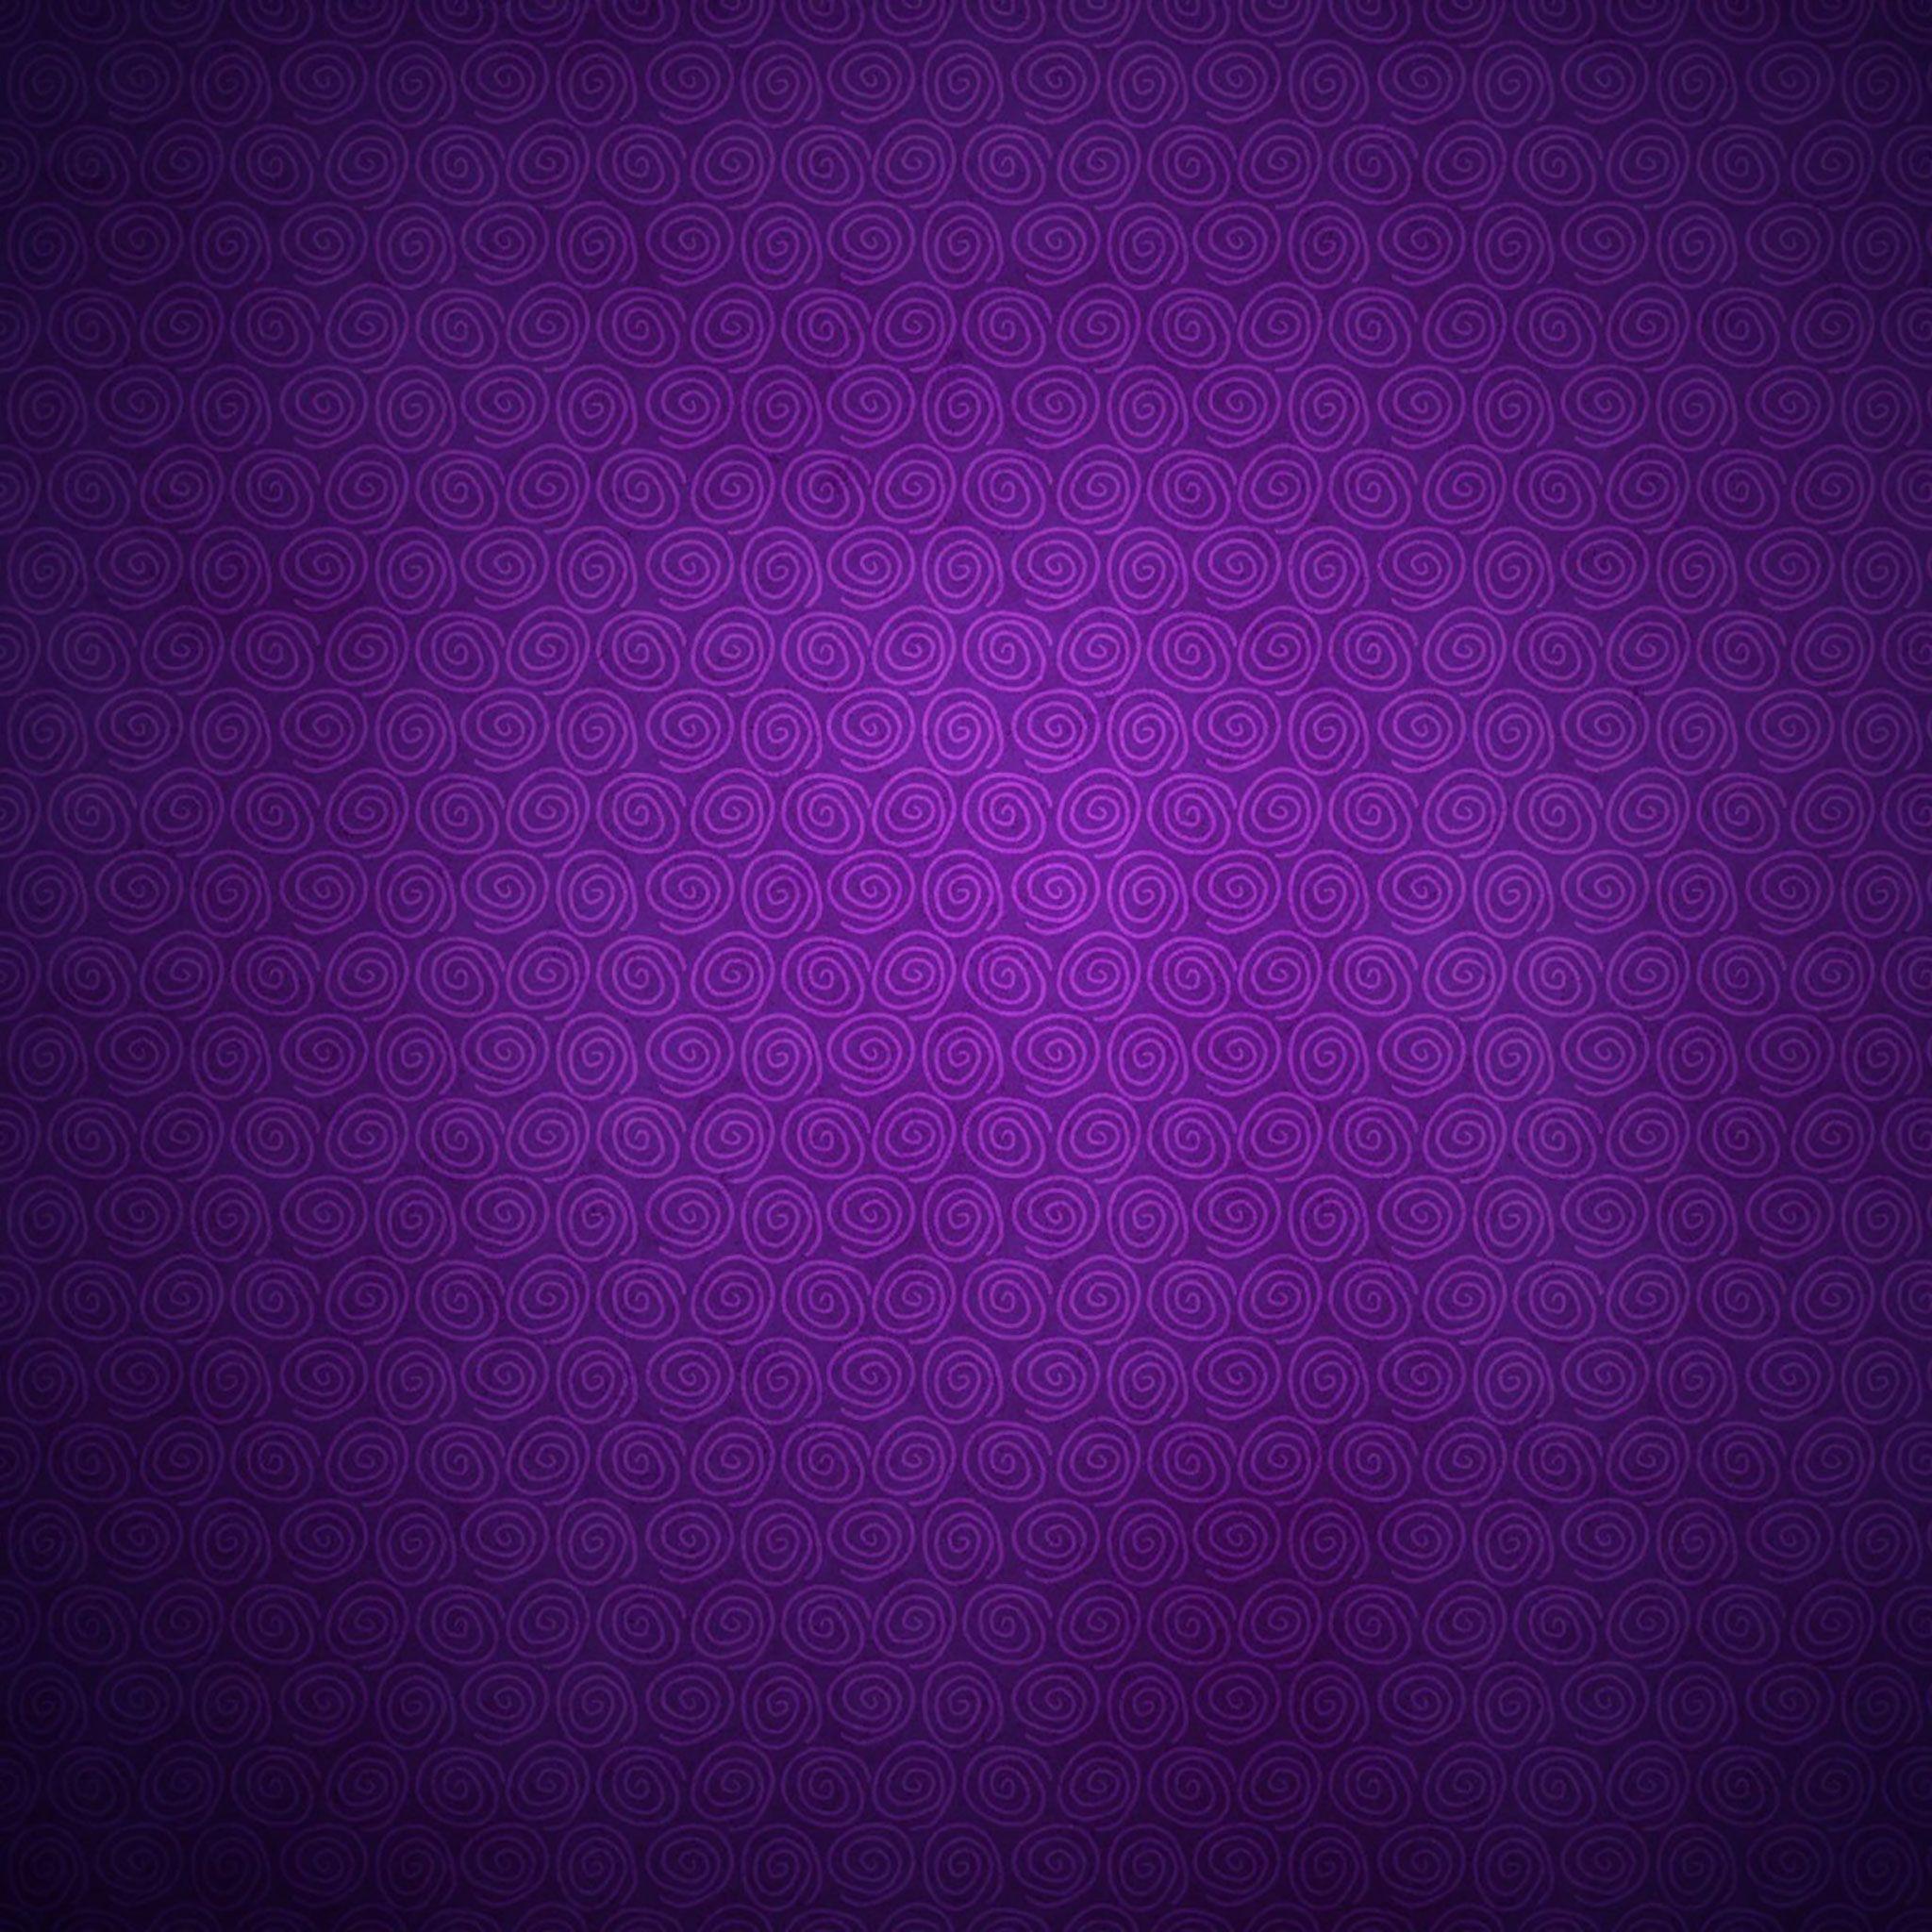 Download wallpaper 1280x1280 planet space universe galaxy purple ipad  ipad 2 ipad mini for parallax hd background